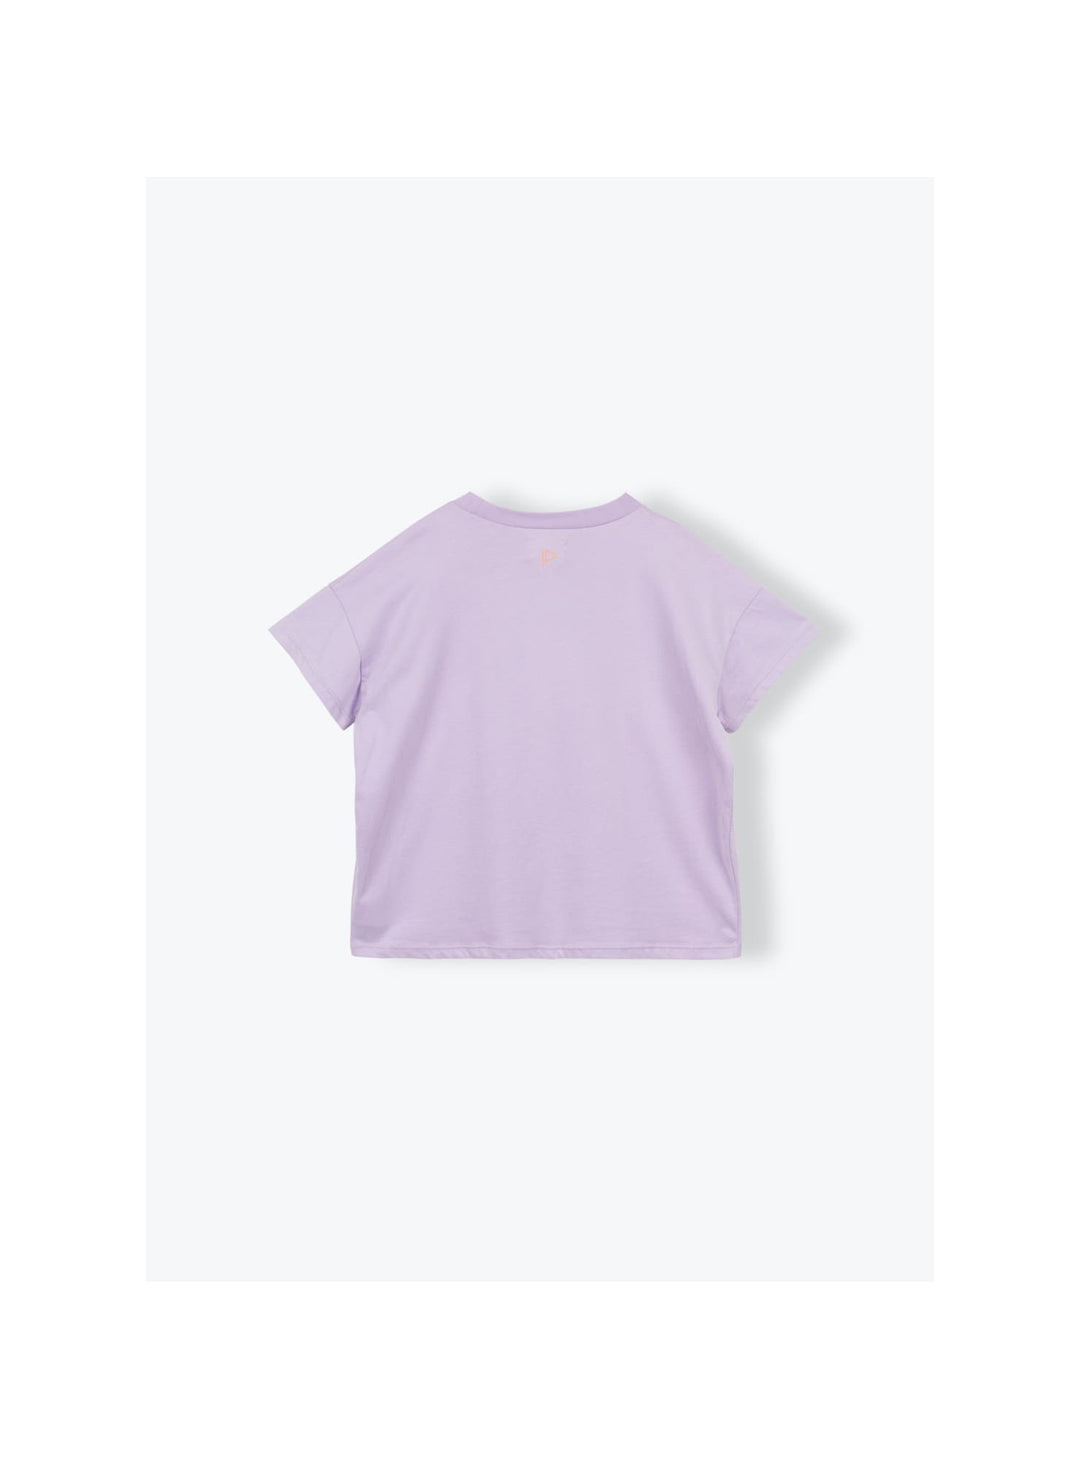 T-Shirt Girl Dick - قميص